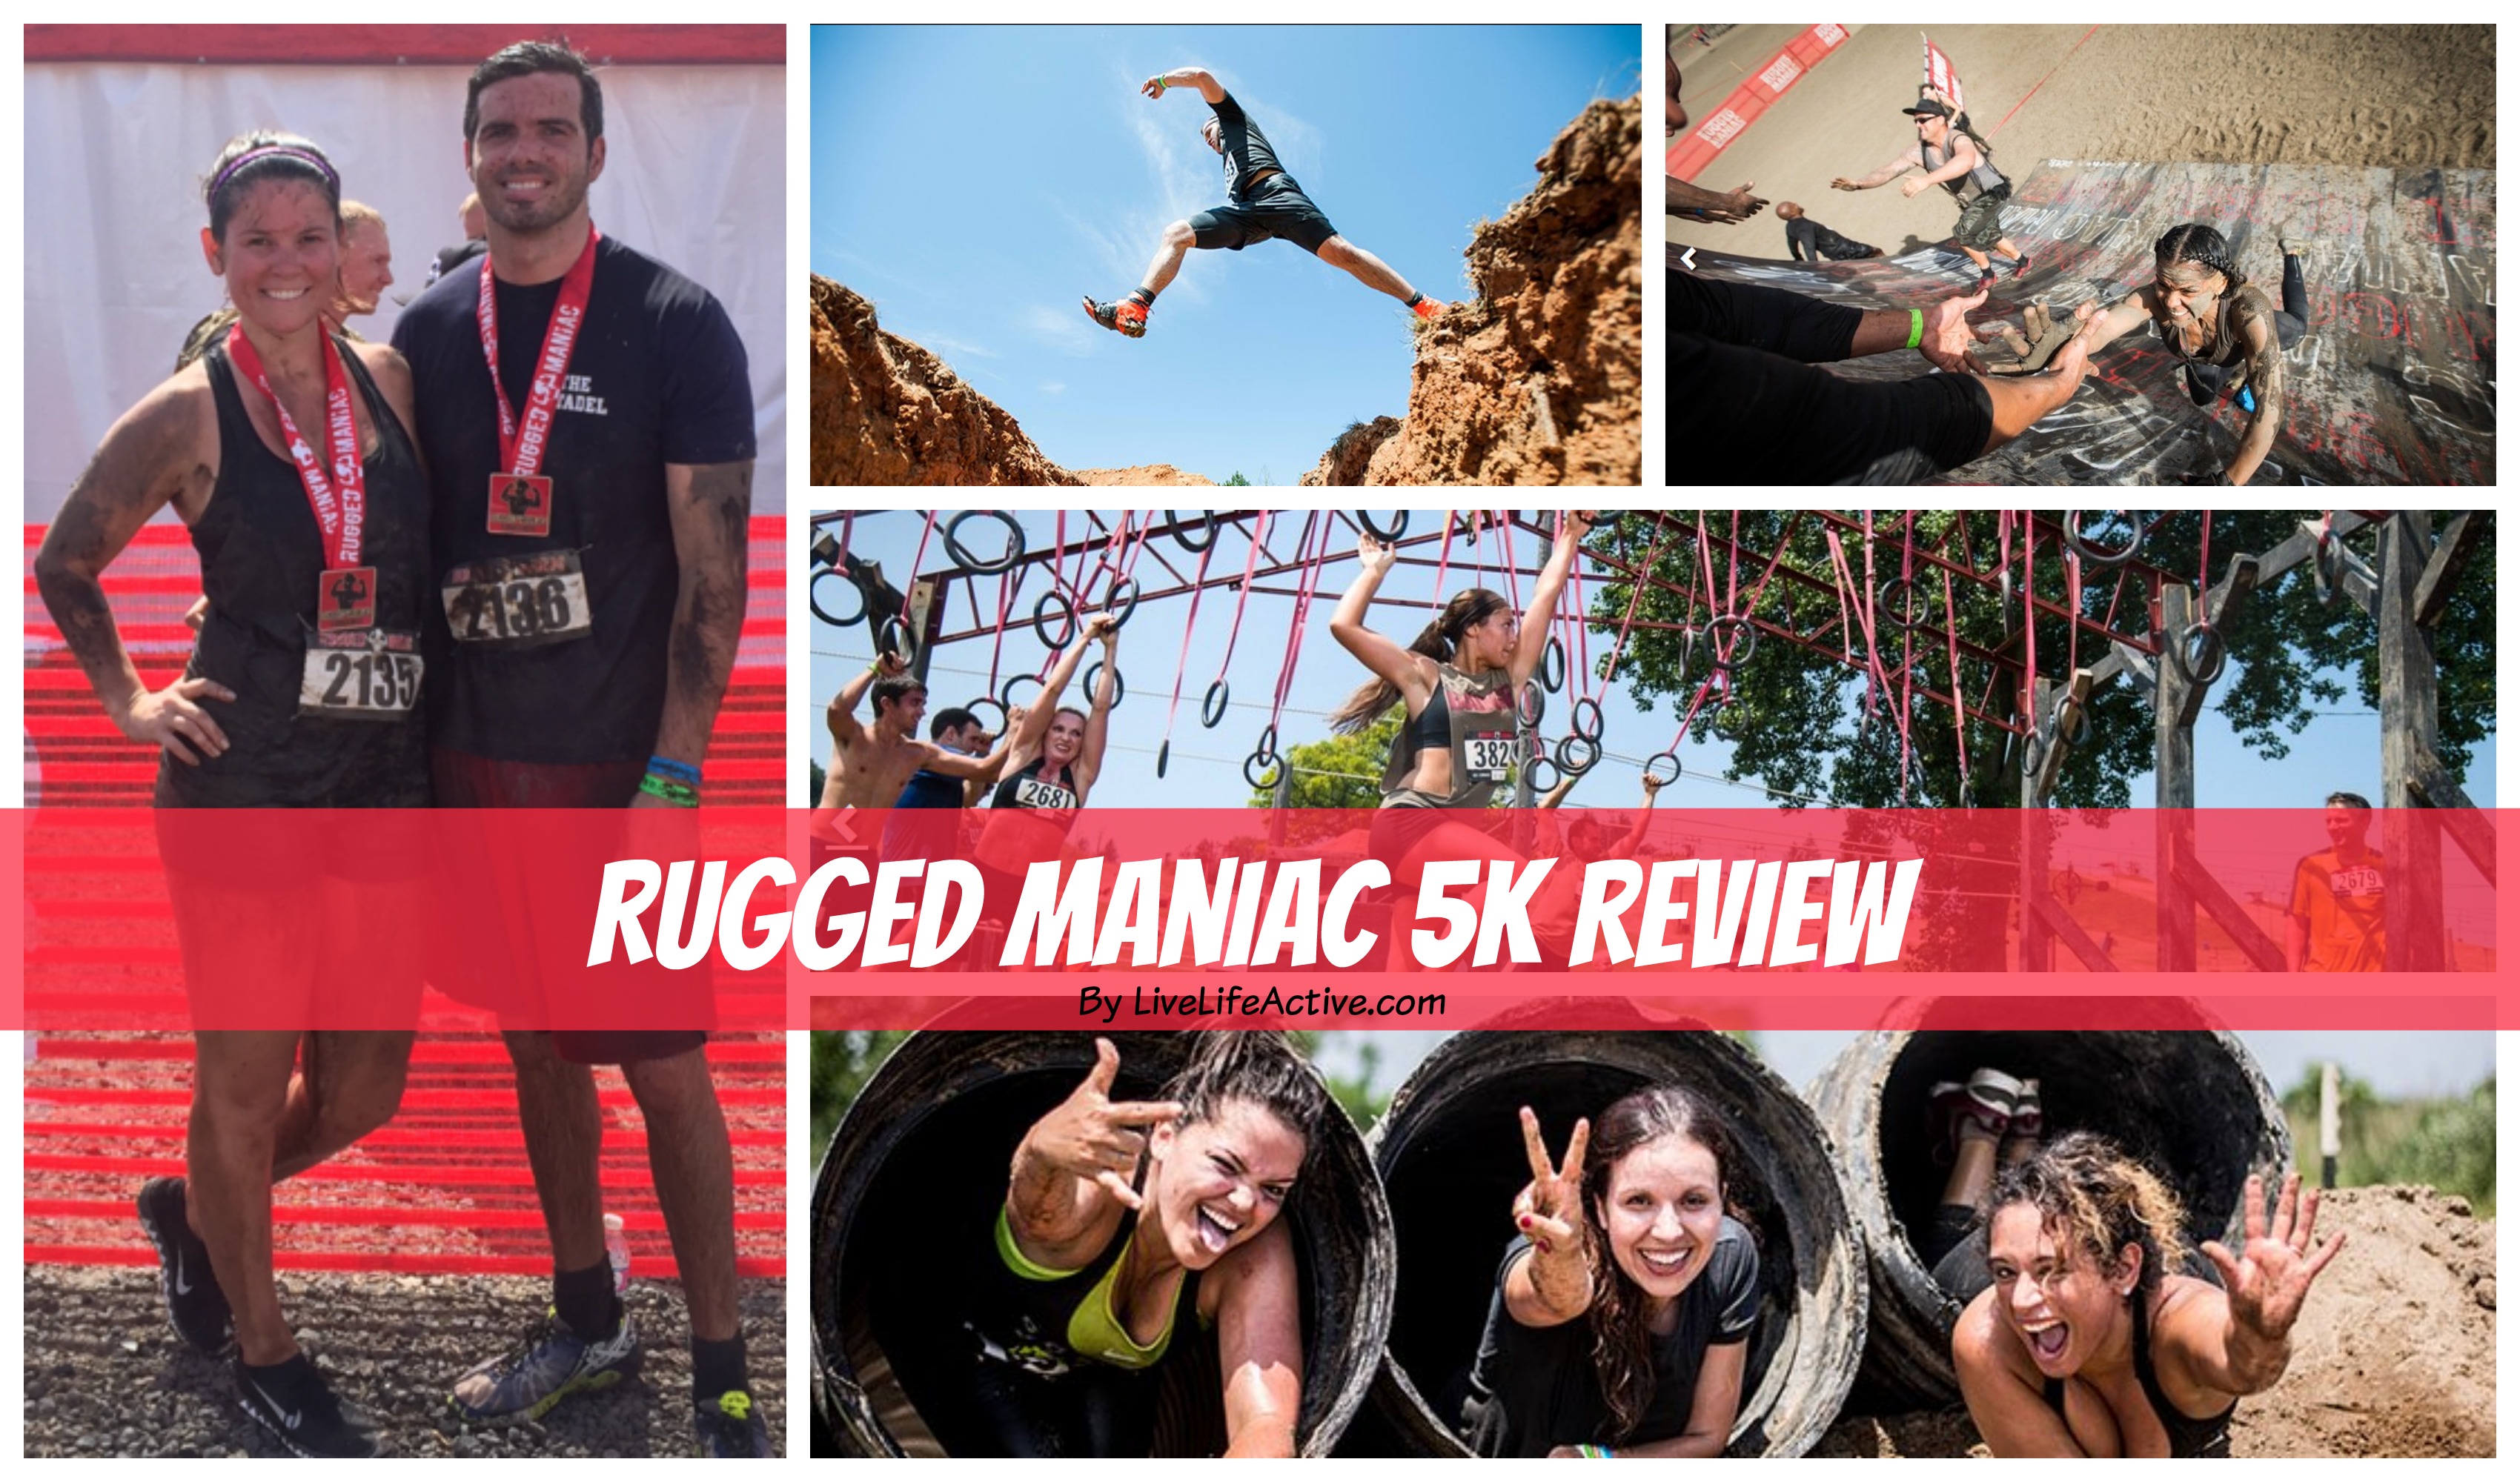 Rugged Maniac 5k Review